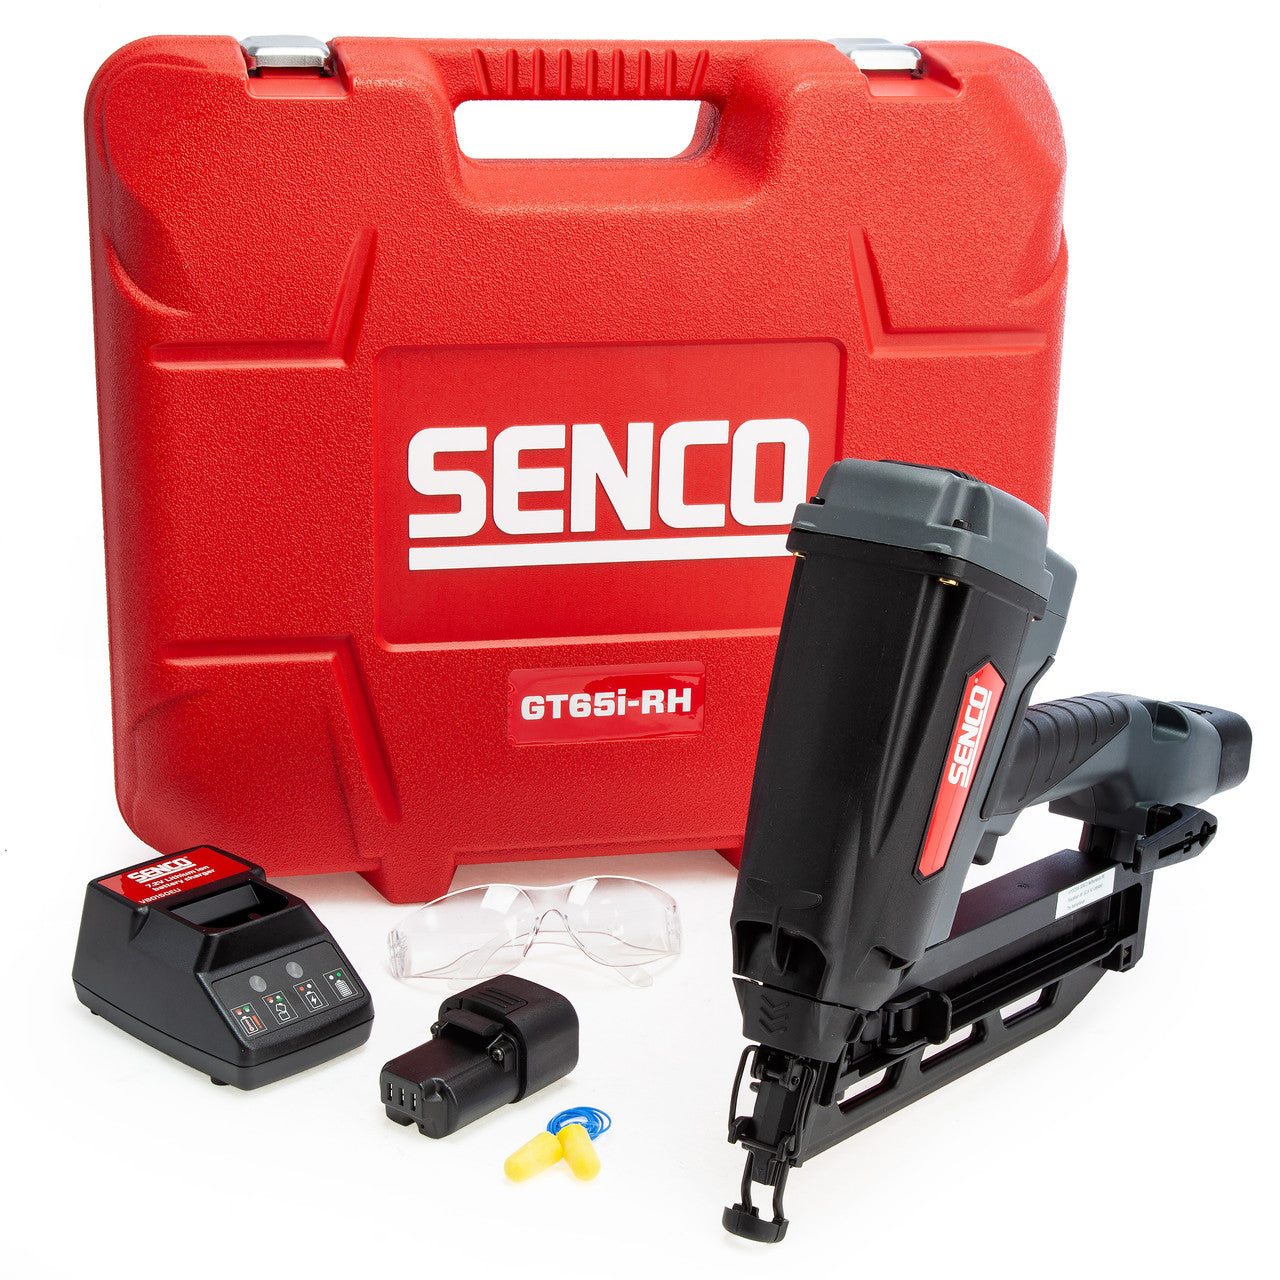 Senco GT65I-RH 9VS7001N Cordless Gas Angled Finish Nailer 16Ga (2 x 2.5Ah Batteries)